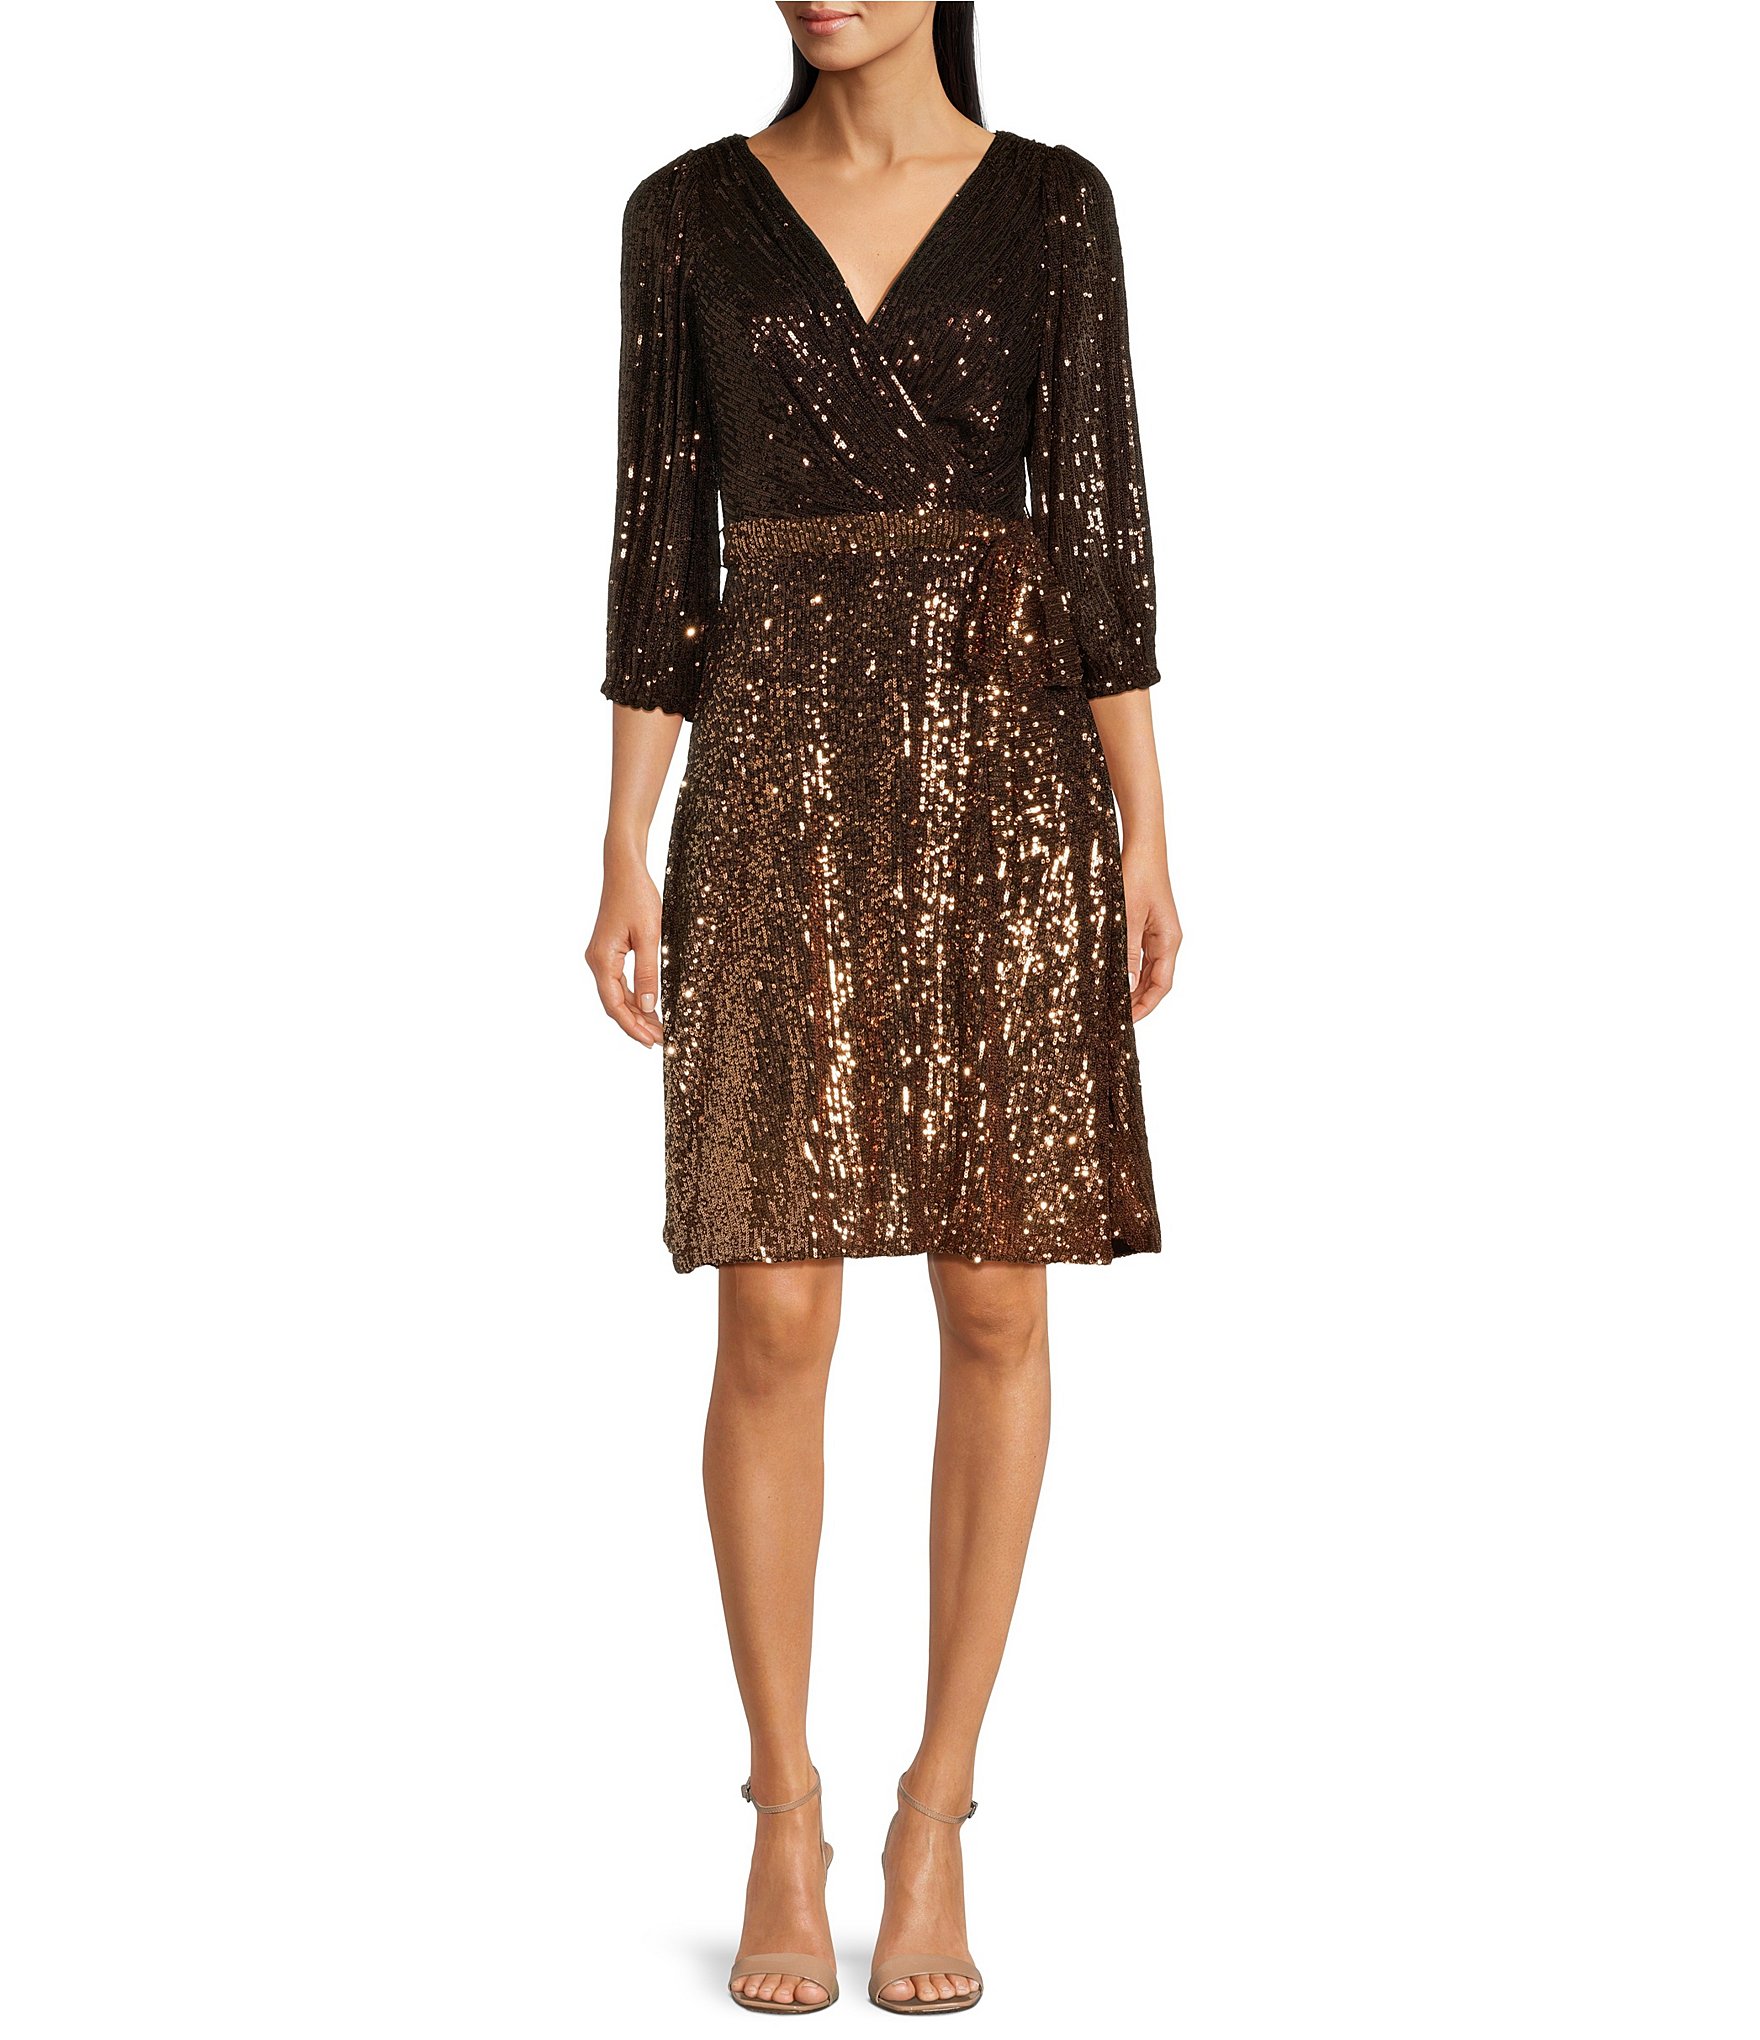 DKNY Petite Size 3/4 Sleeve V-Neck Sequin Faux Wrap Dress | Dillard's